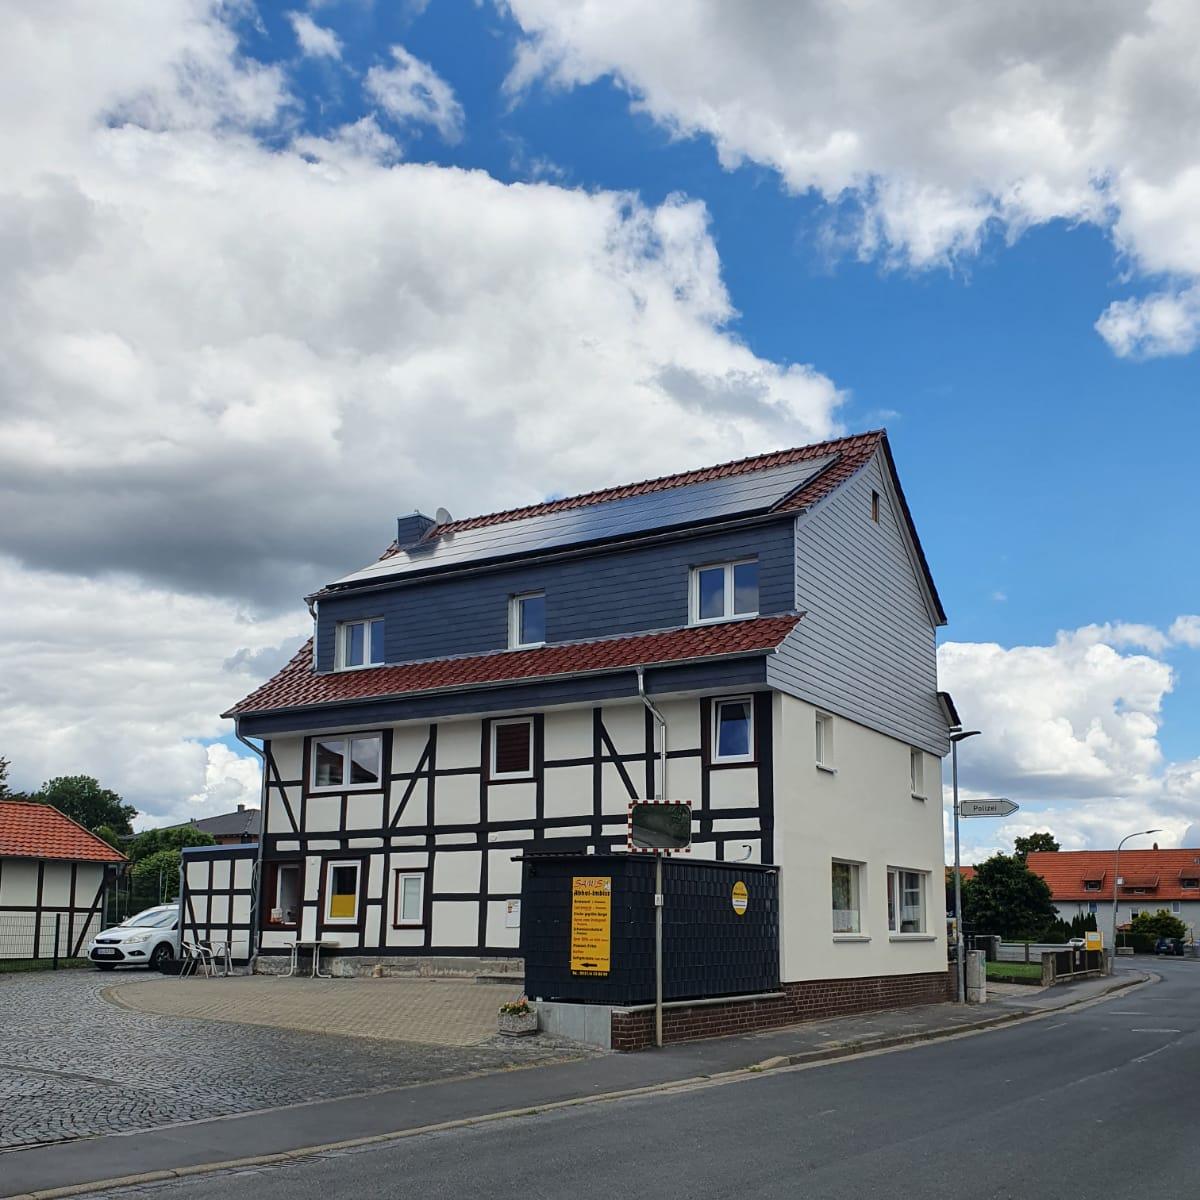 Restaurant "Sami´s Bringdienst" in Rosdorf